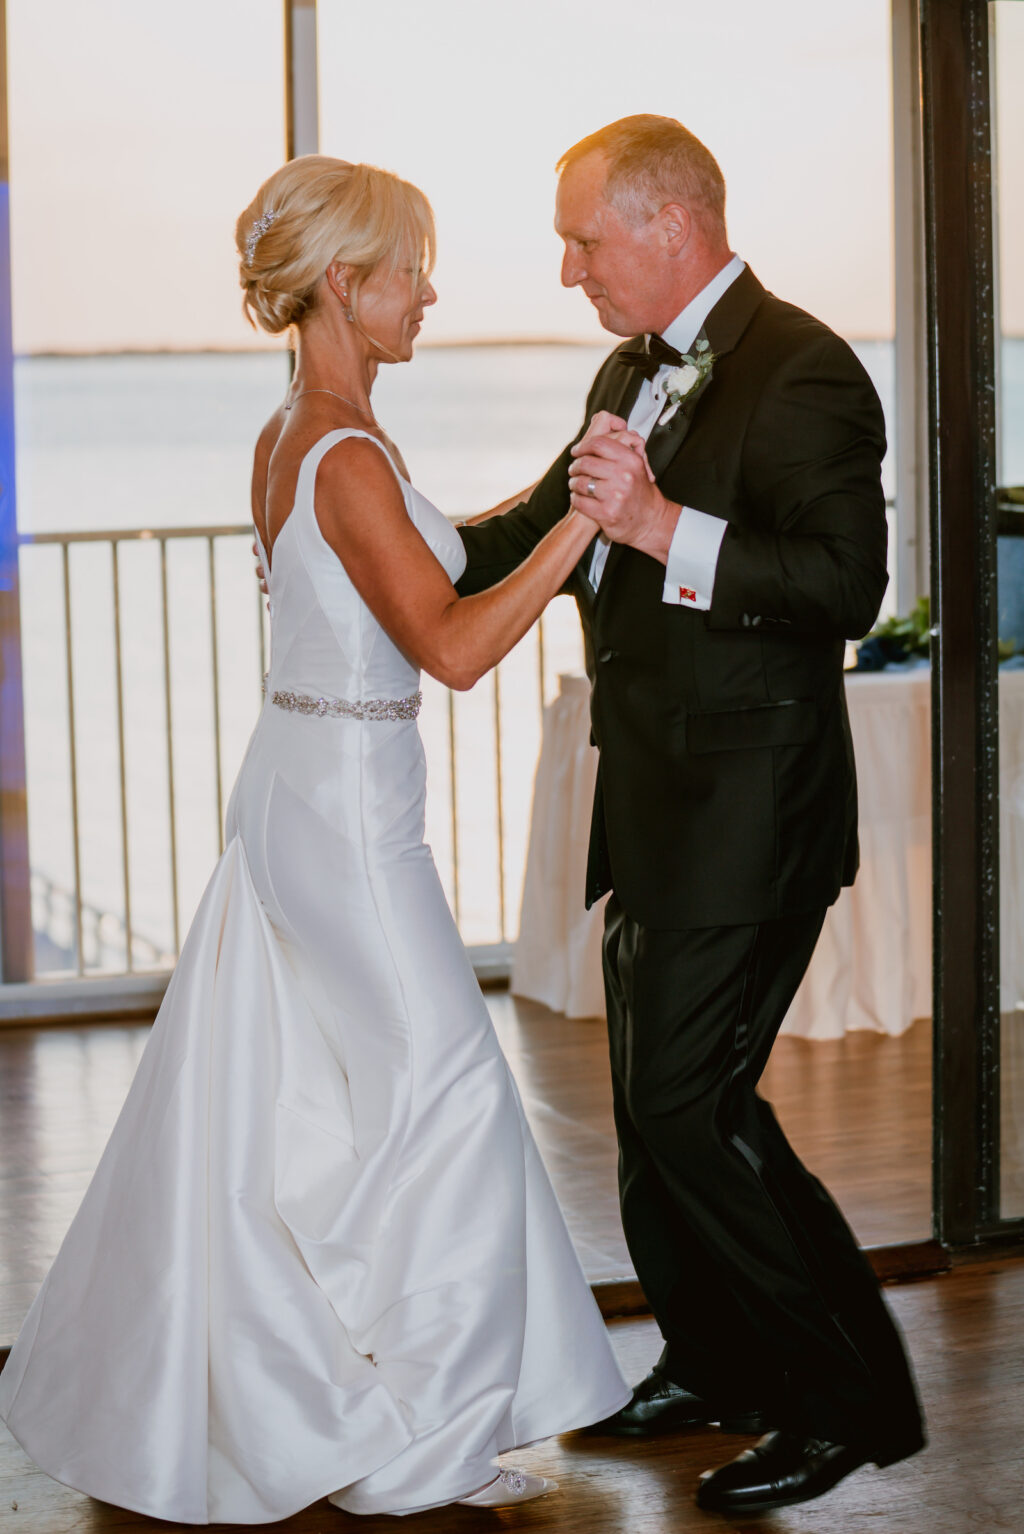 Bride and Groom First Dance Portrait | Tampa Bay Wedding DJ Grant Hemond & Associates